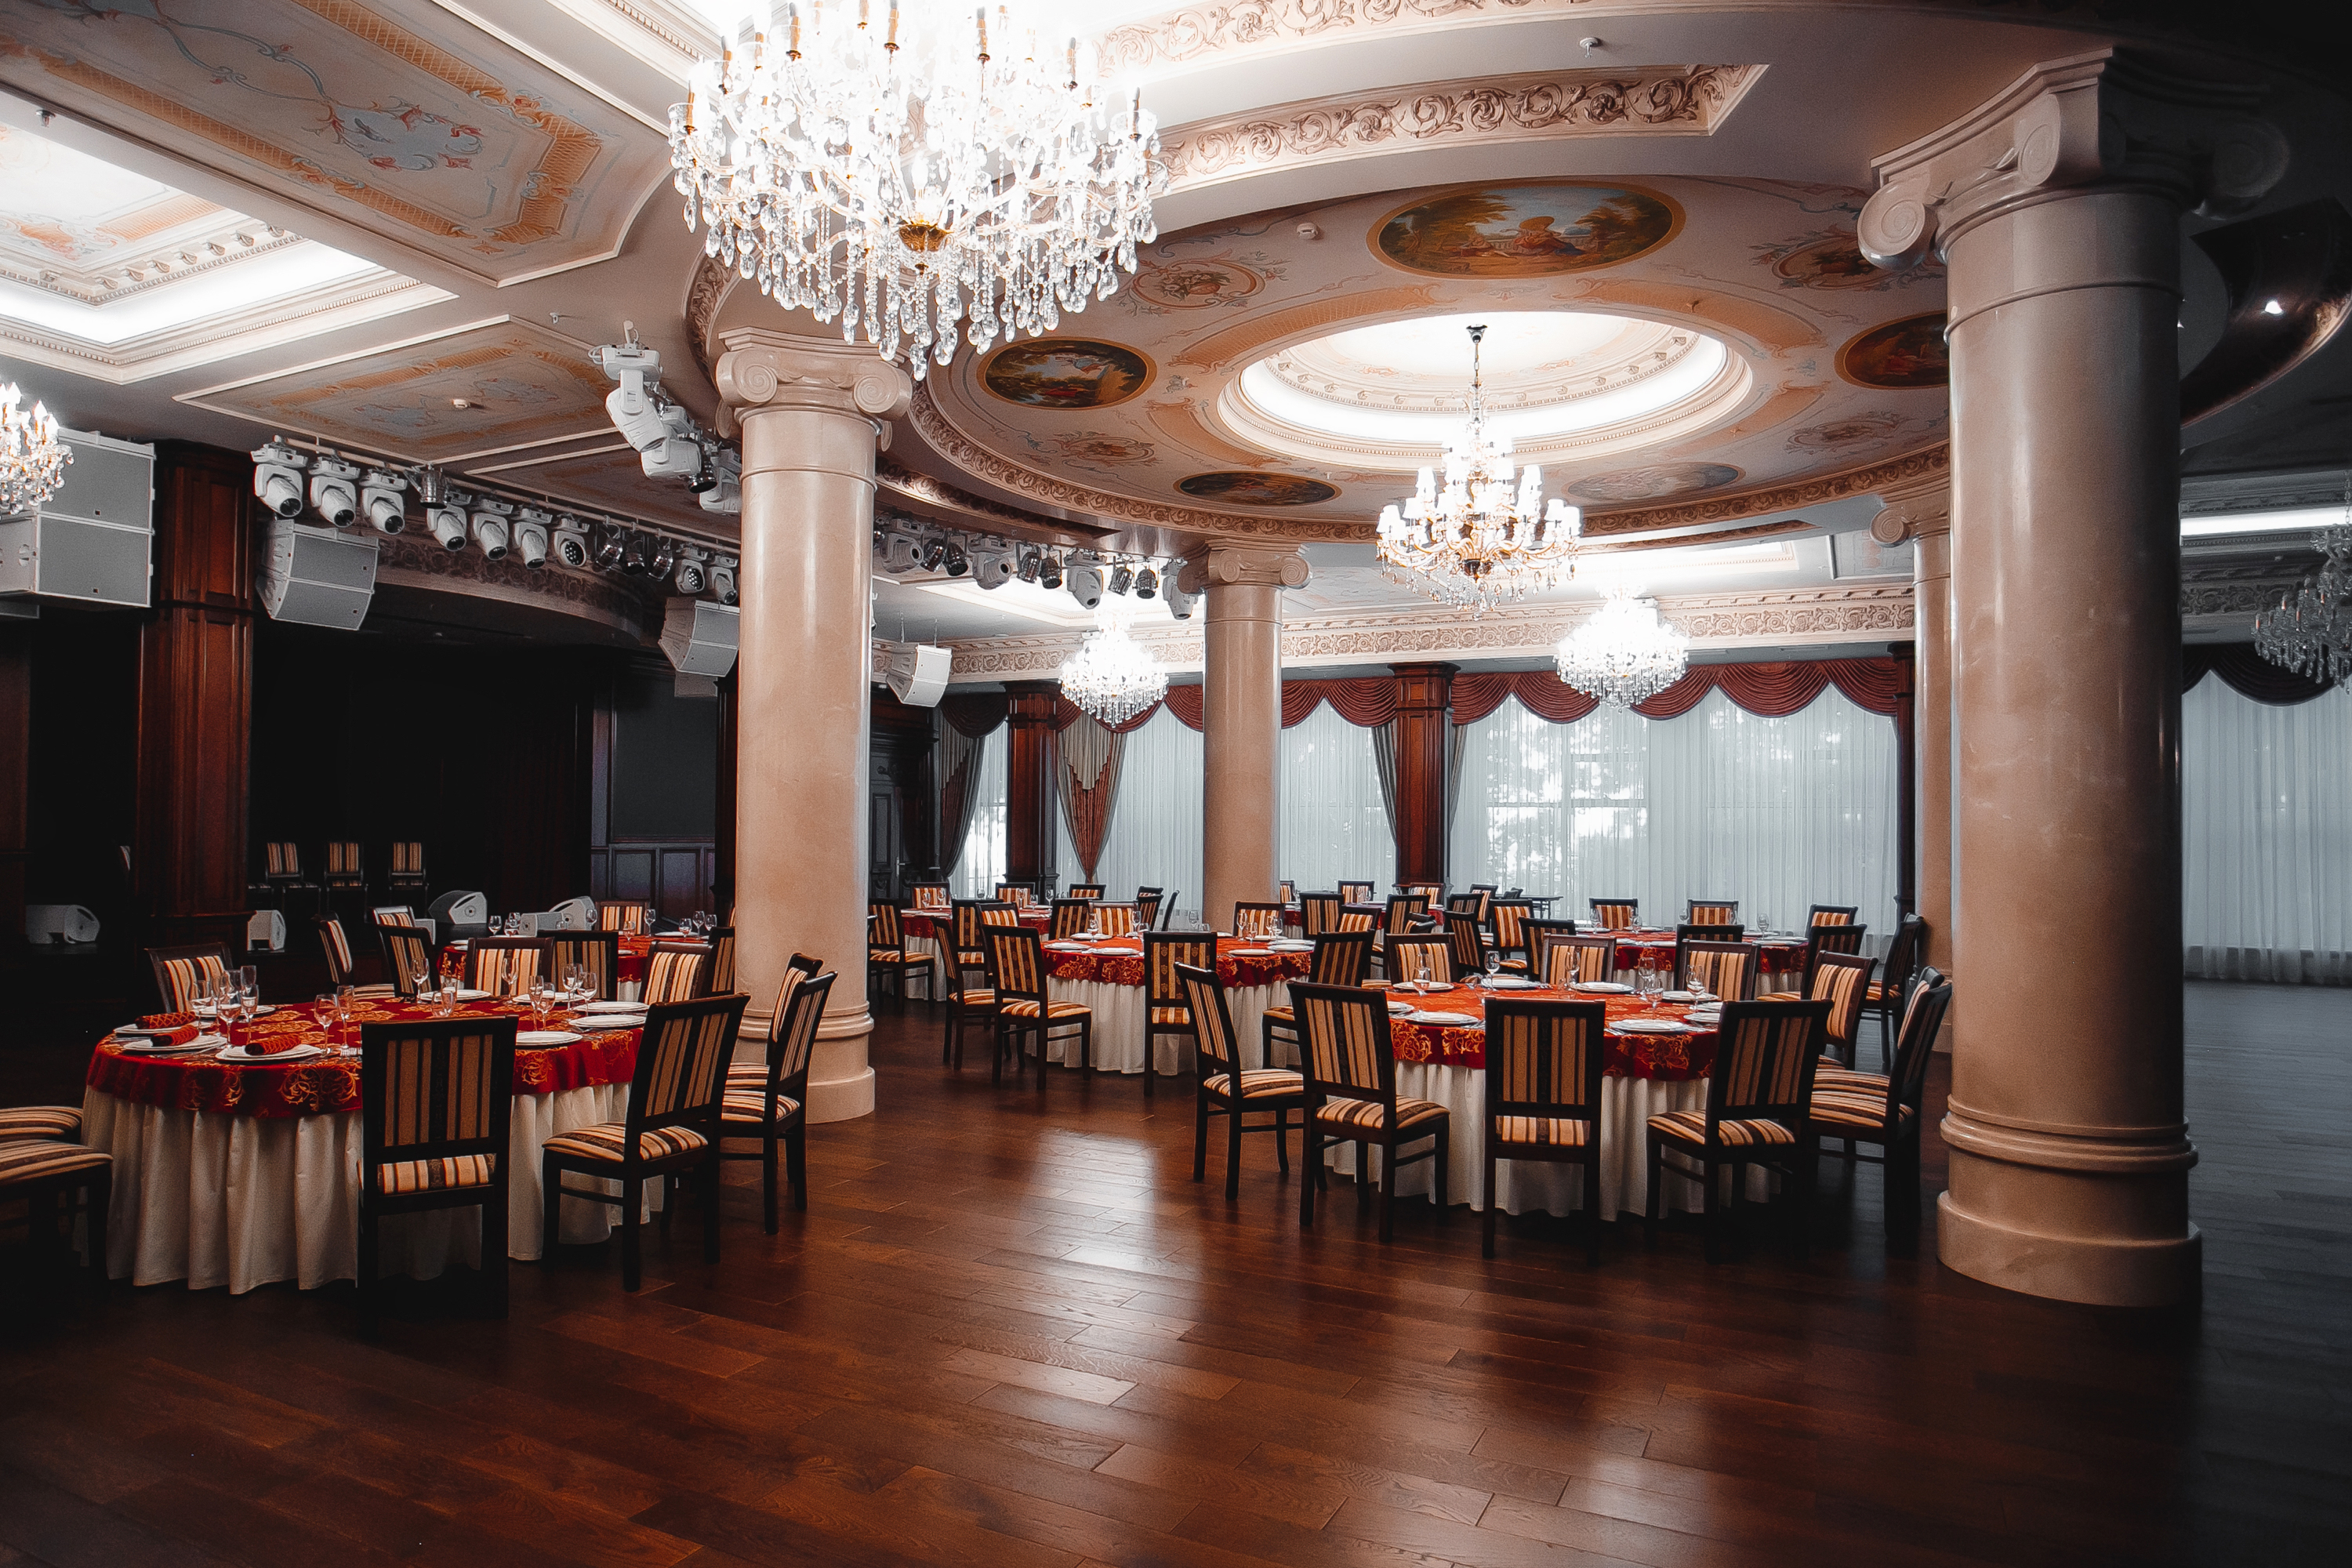 Ресторан в Краснодаре с колоннами